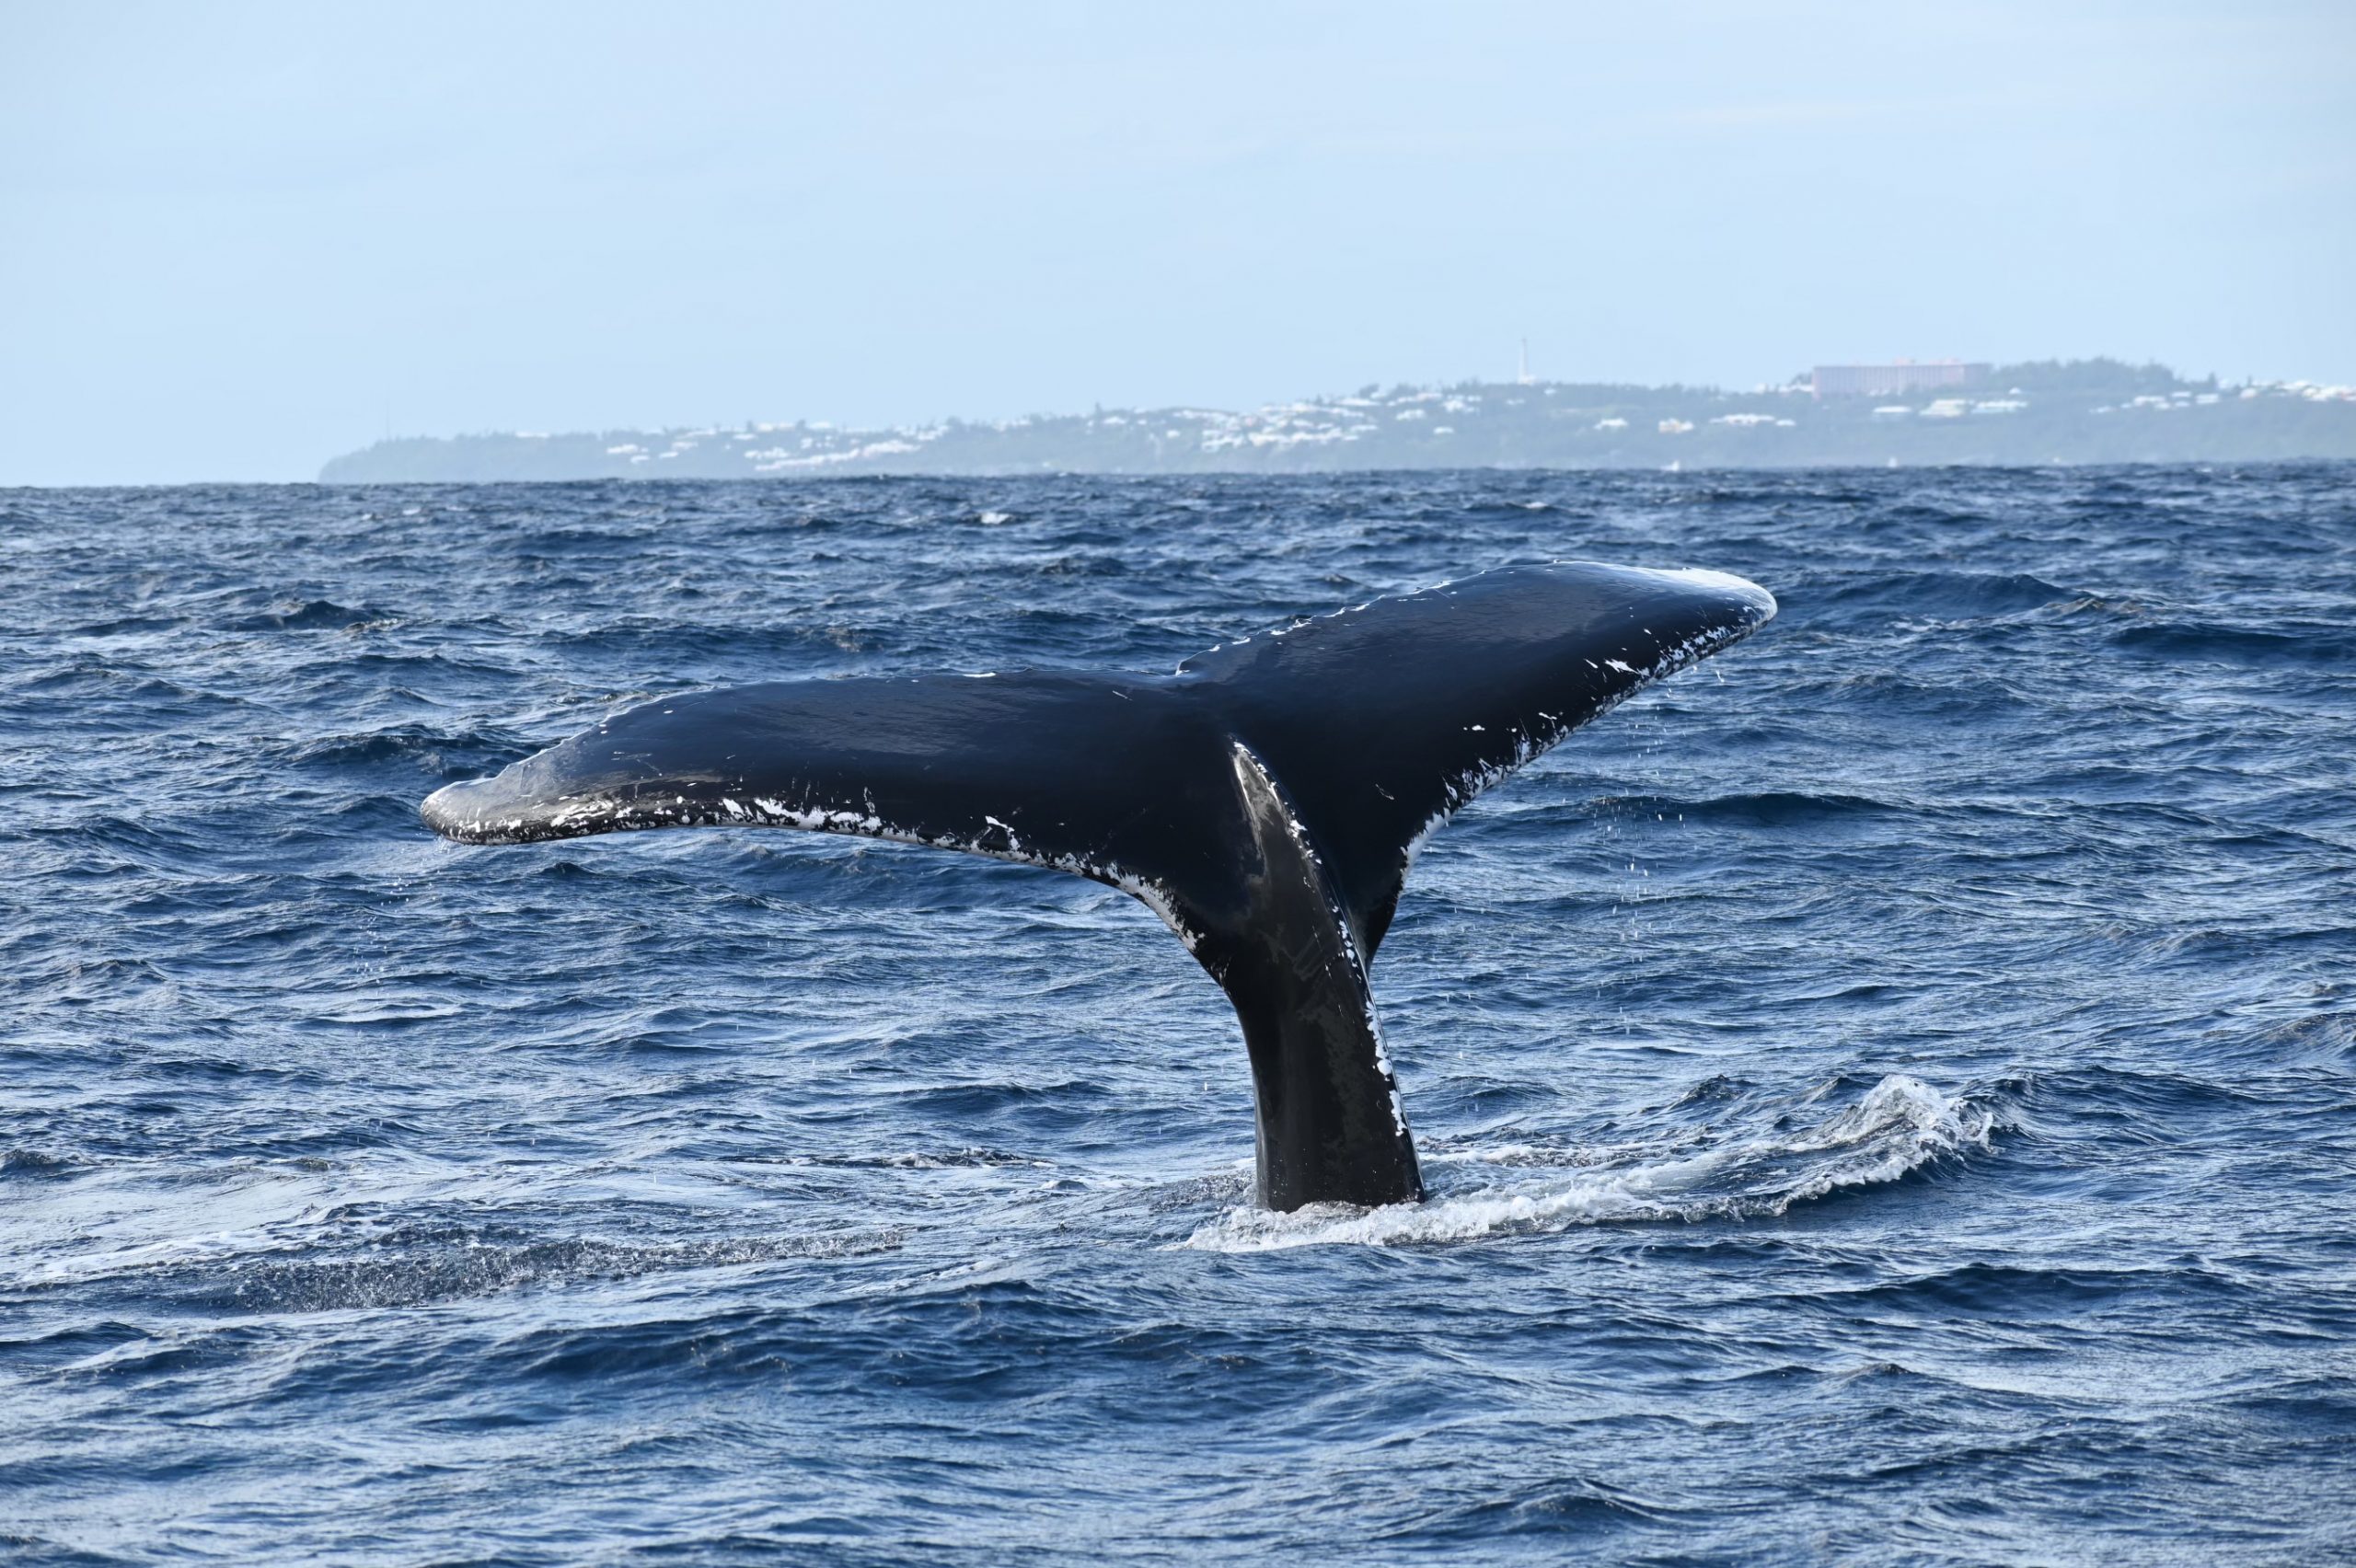 The intruding whale. (Photo: David Ullman)